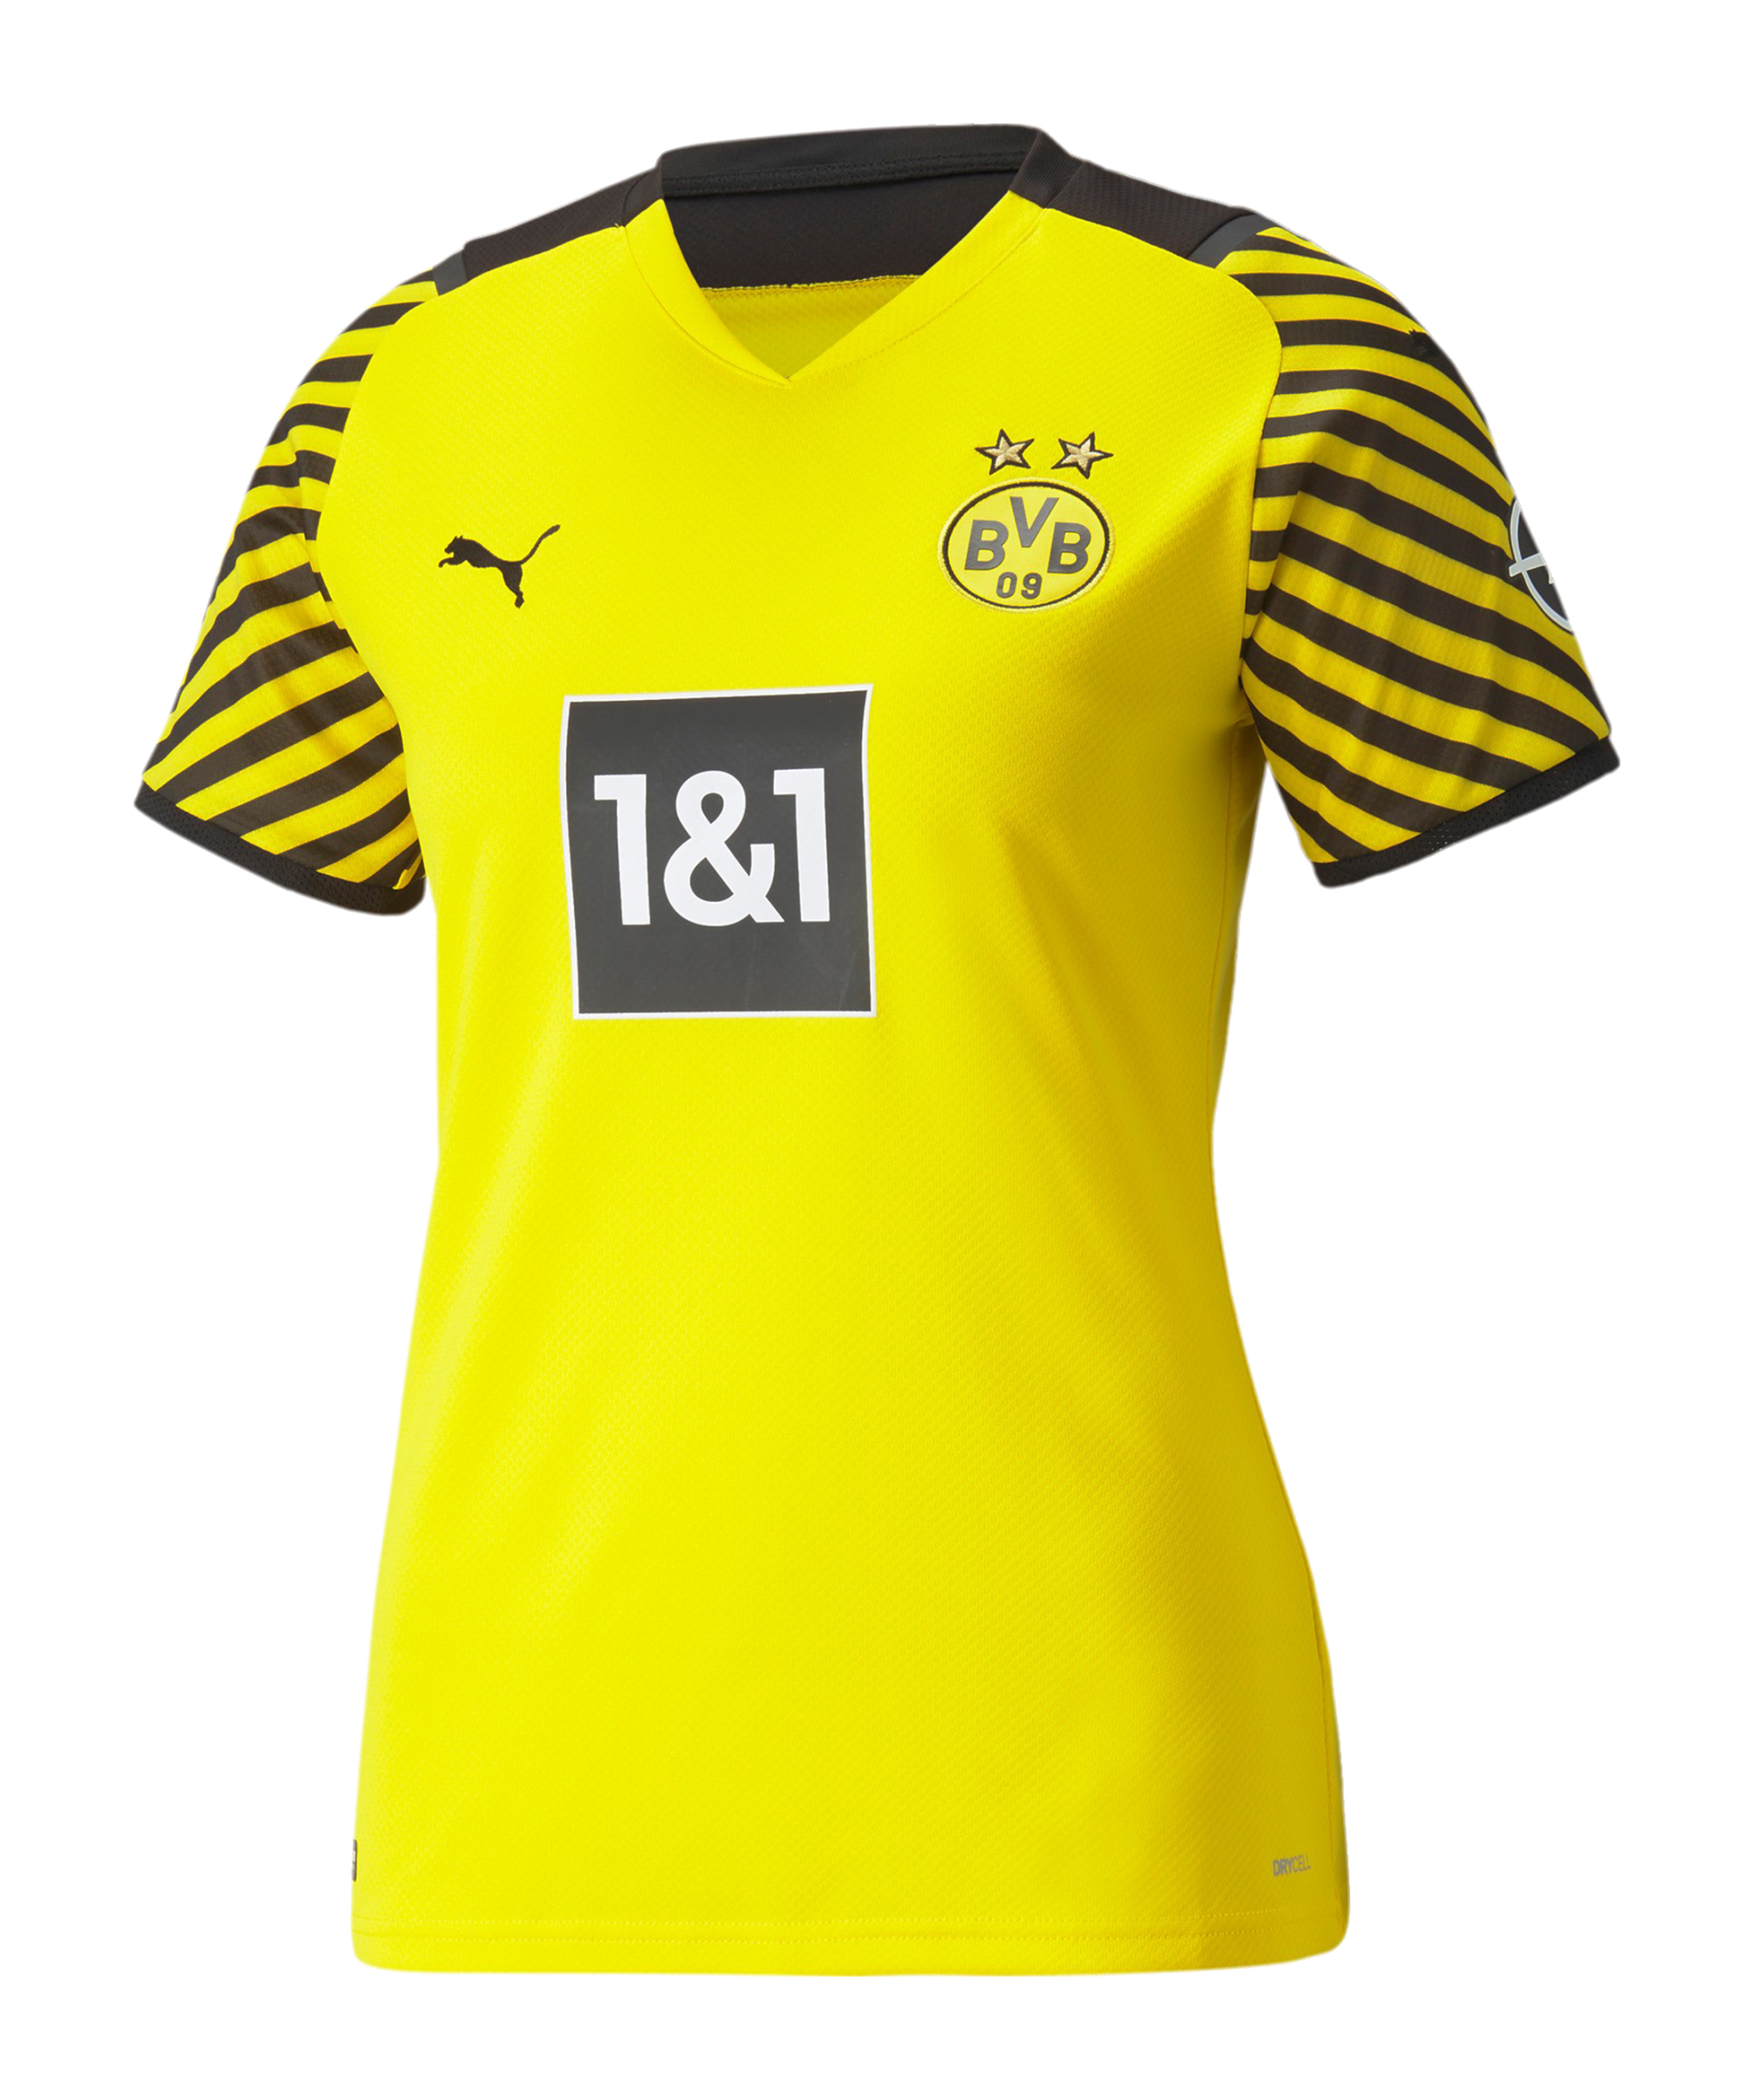 PUMA BVB Dortmund Shirt Home 2021/2022 Women